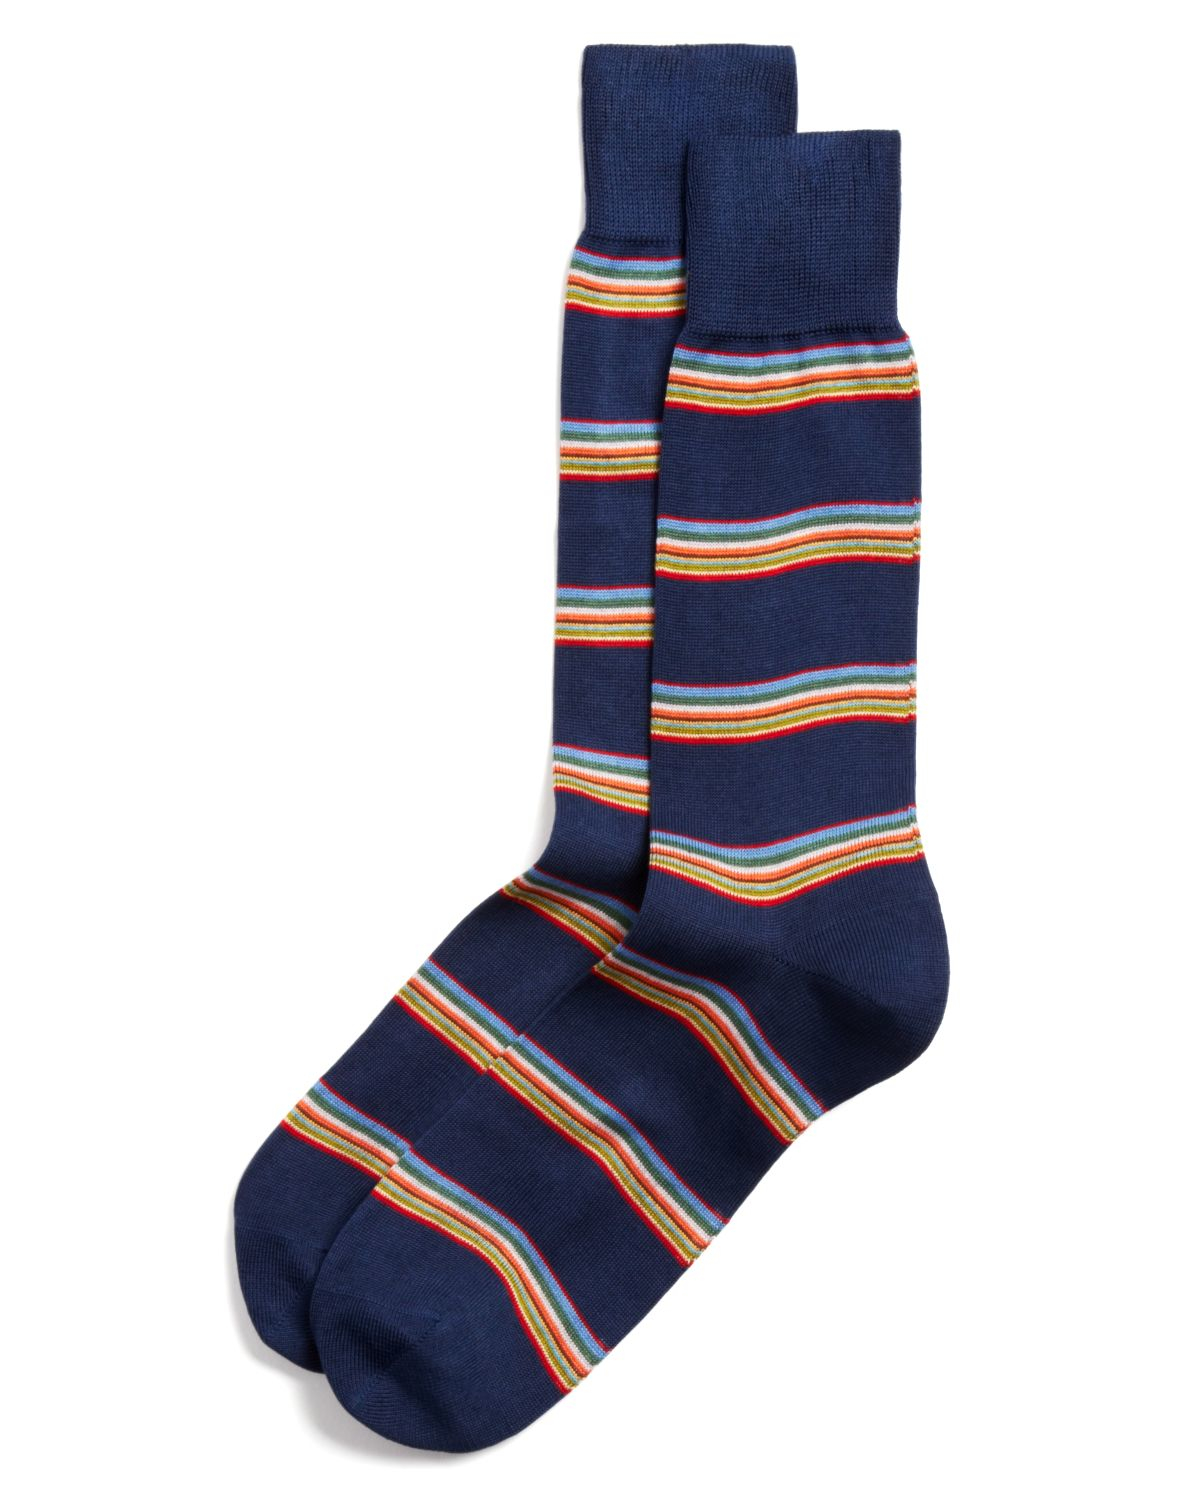 Lyst - Paul Smith Multi Stripe Socks in Blue for Men